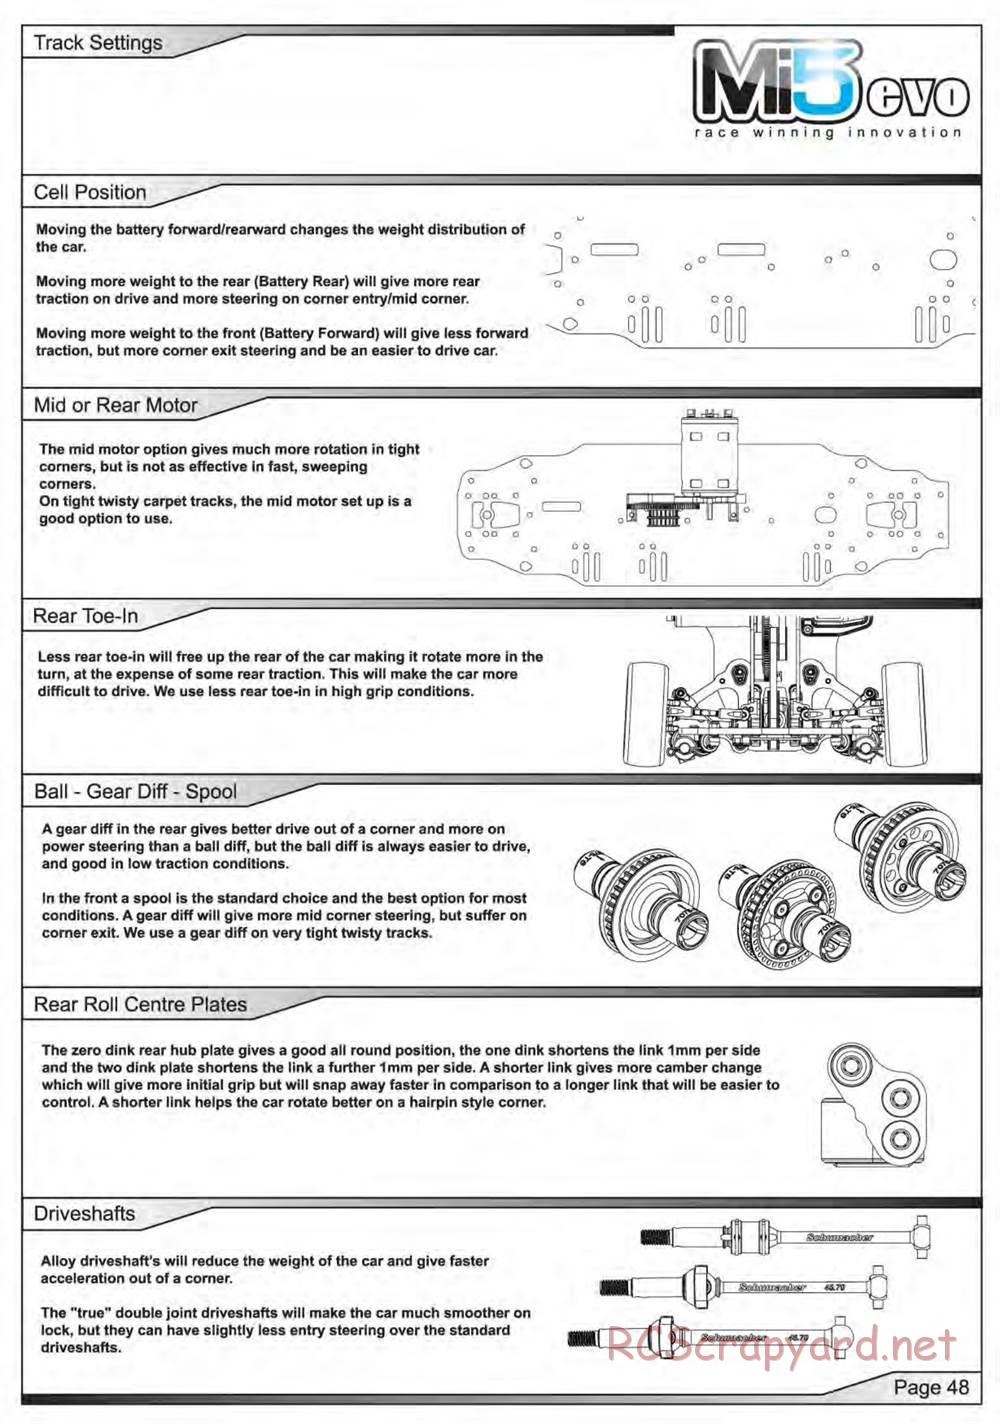 Schumacher - Mi5 Evo - Manual - Page 49